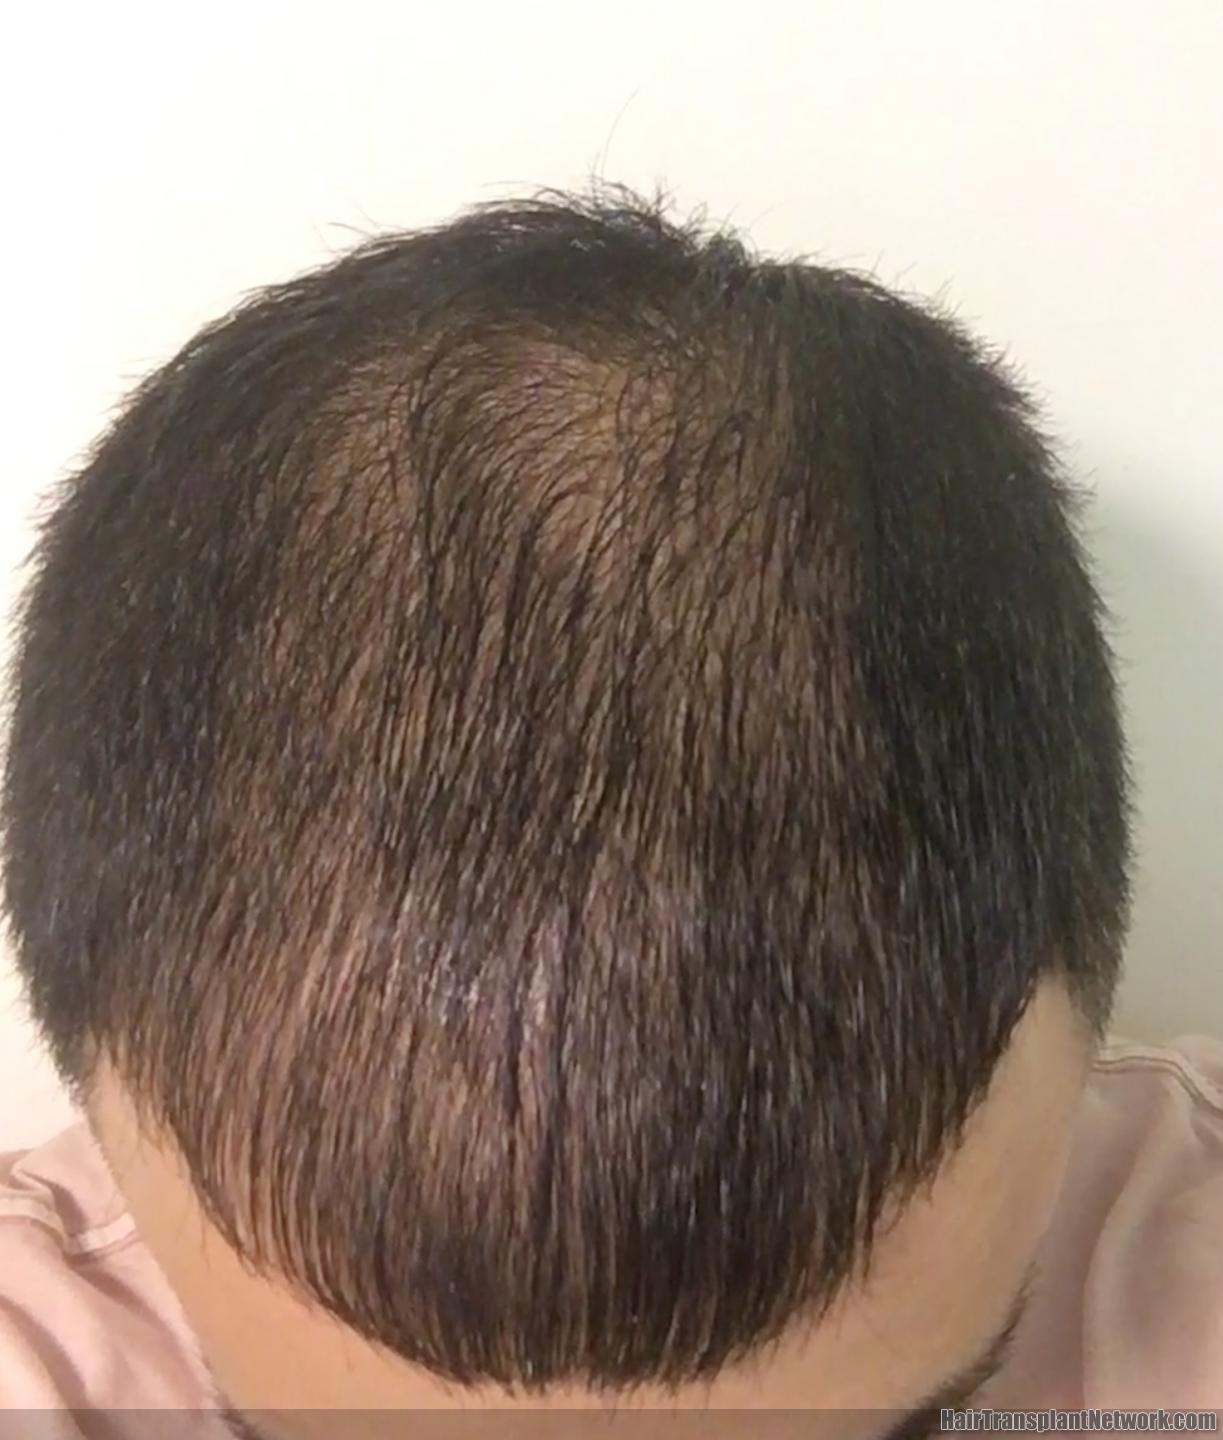 Progressive diffuse scalp hair loss in a woman  Clinical Advisor